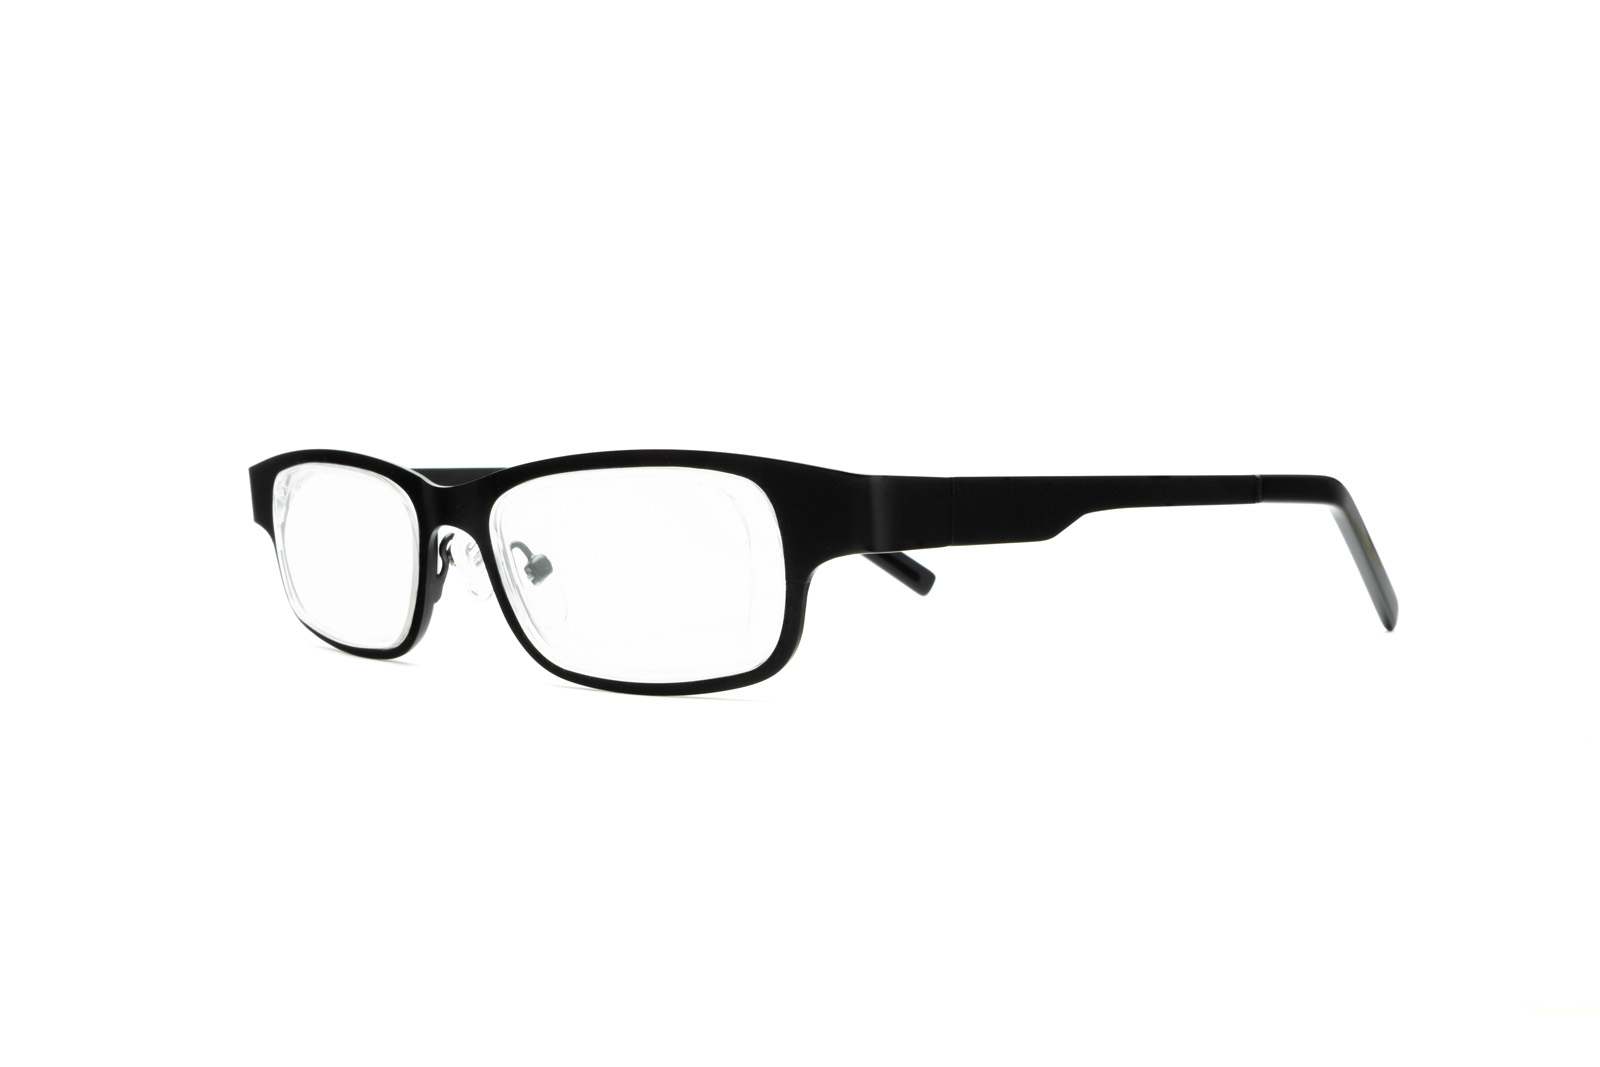 Eyejusters - Stainless Steel Adjustable Glasses